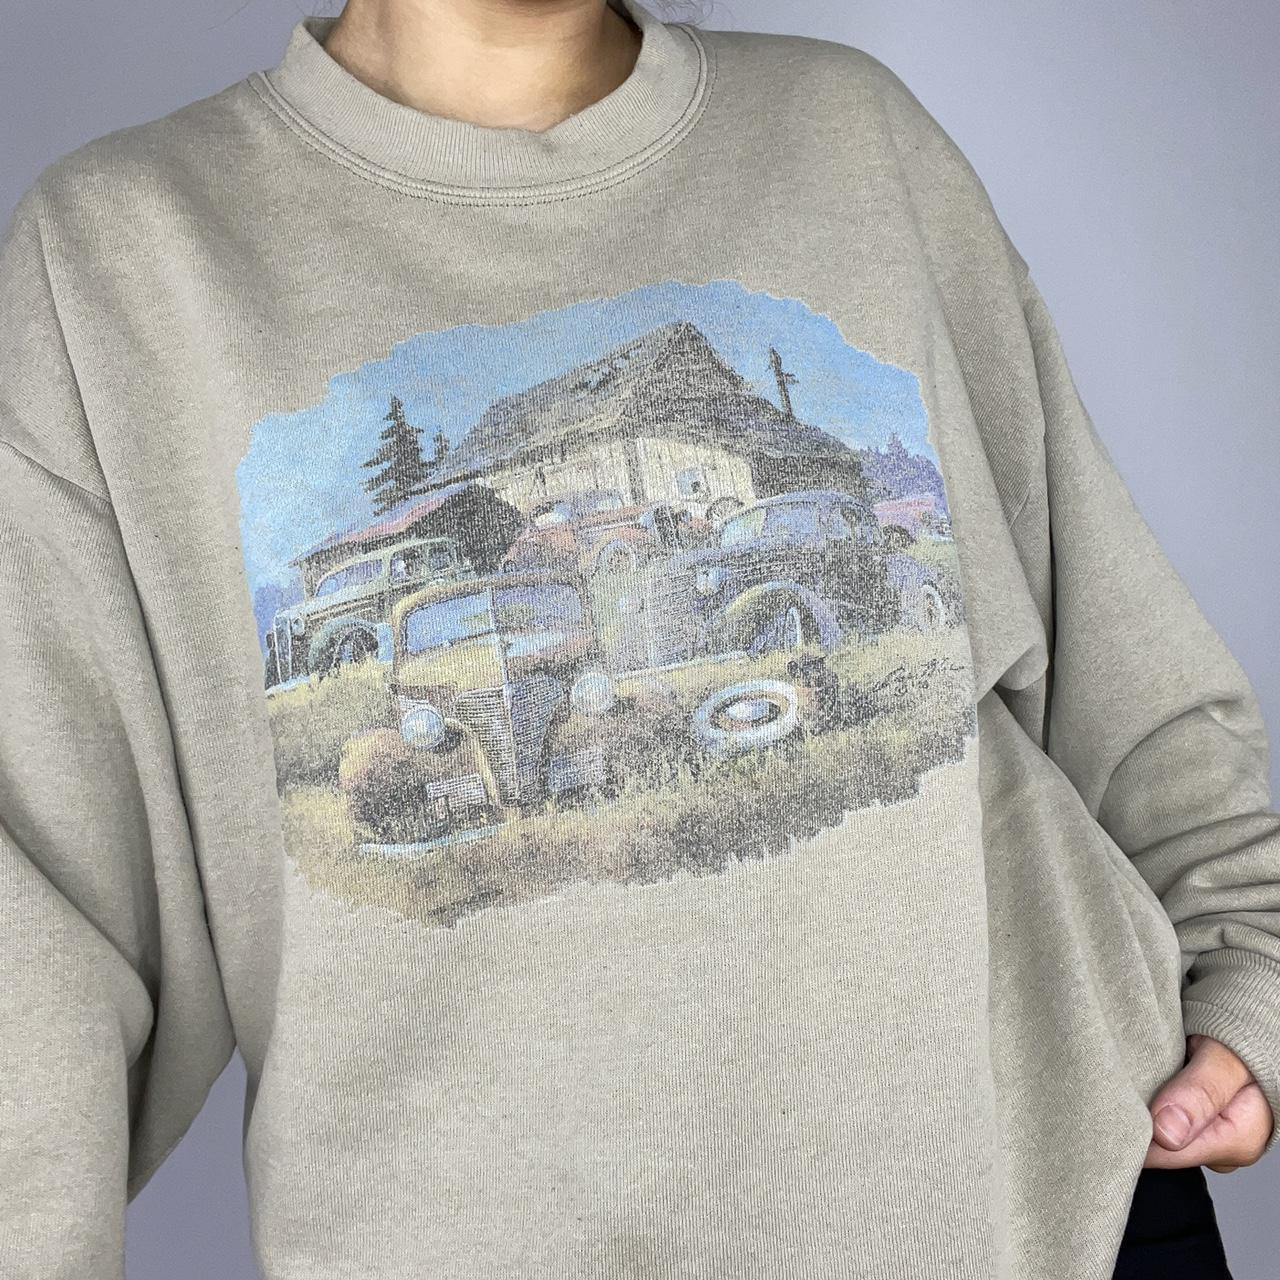 Product Image 4 - Vintage tan crewneck 🧸

Nature sweater